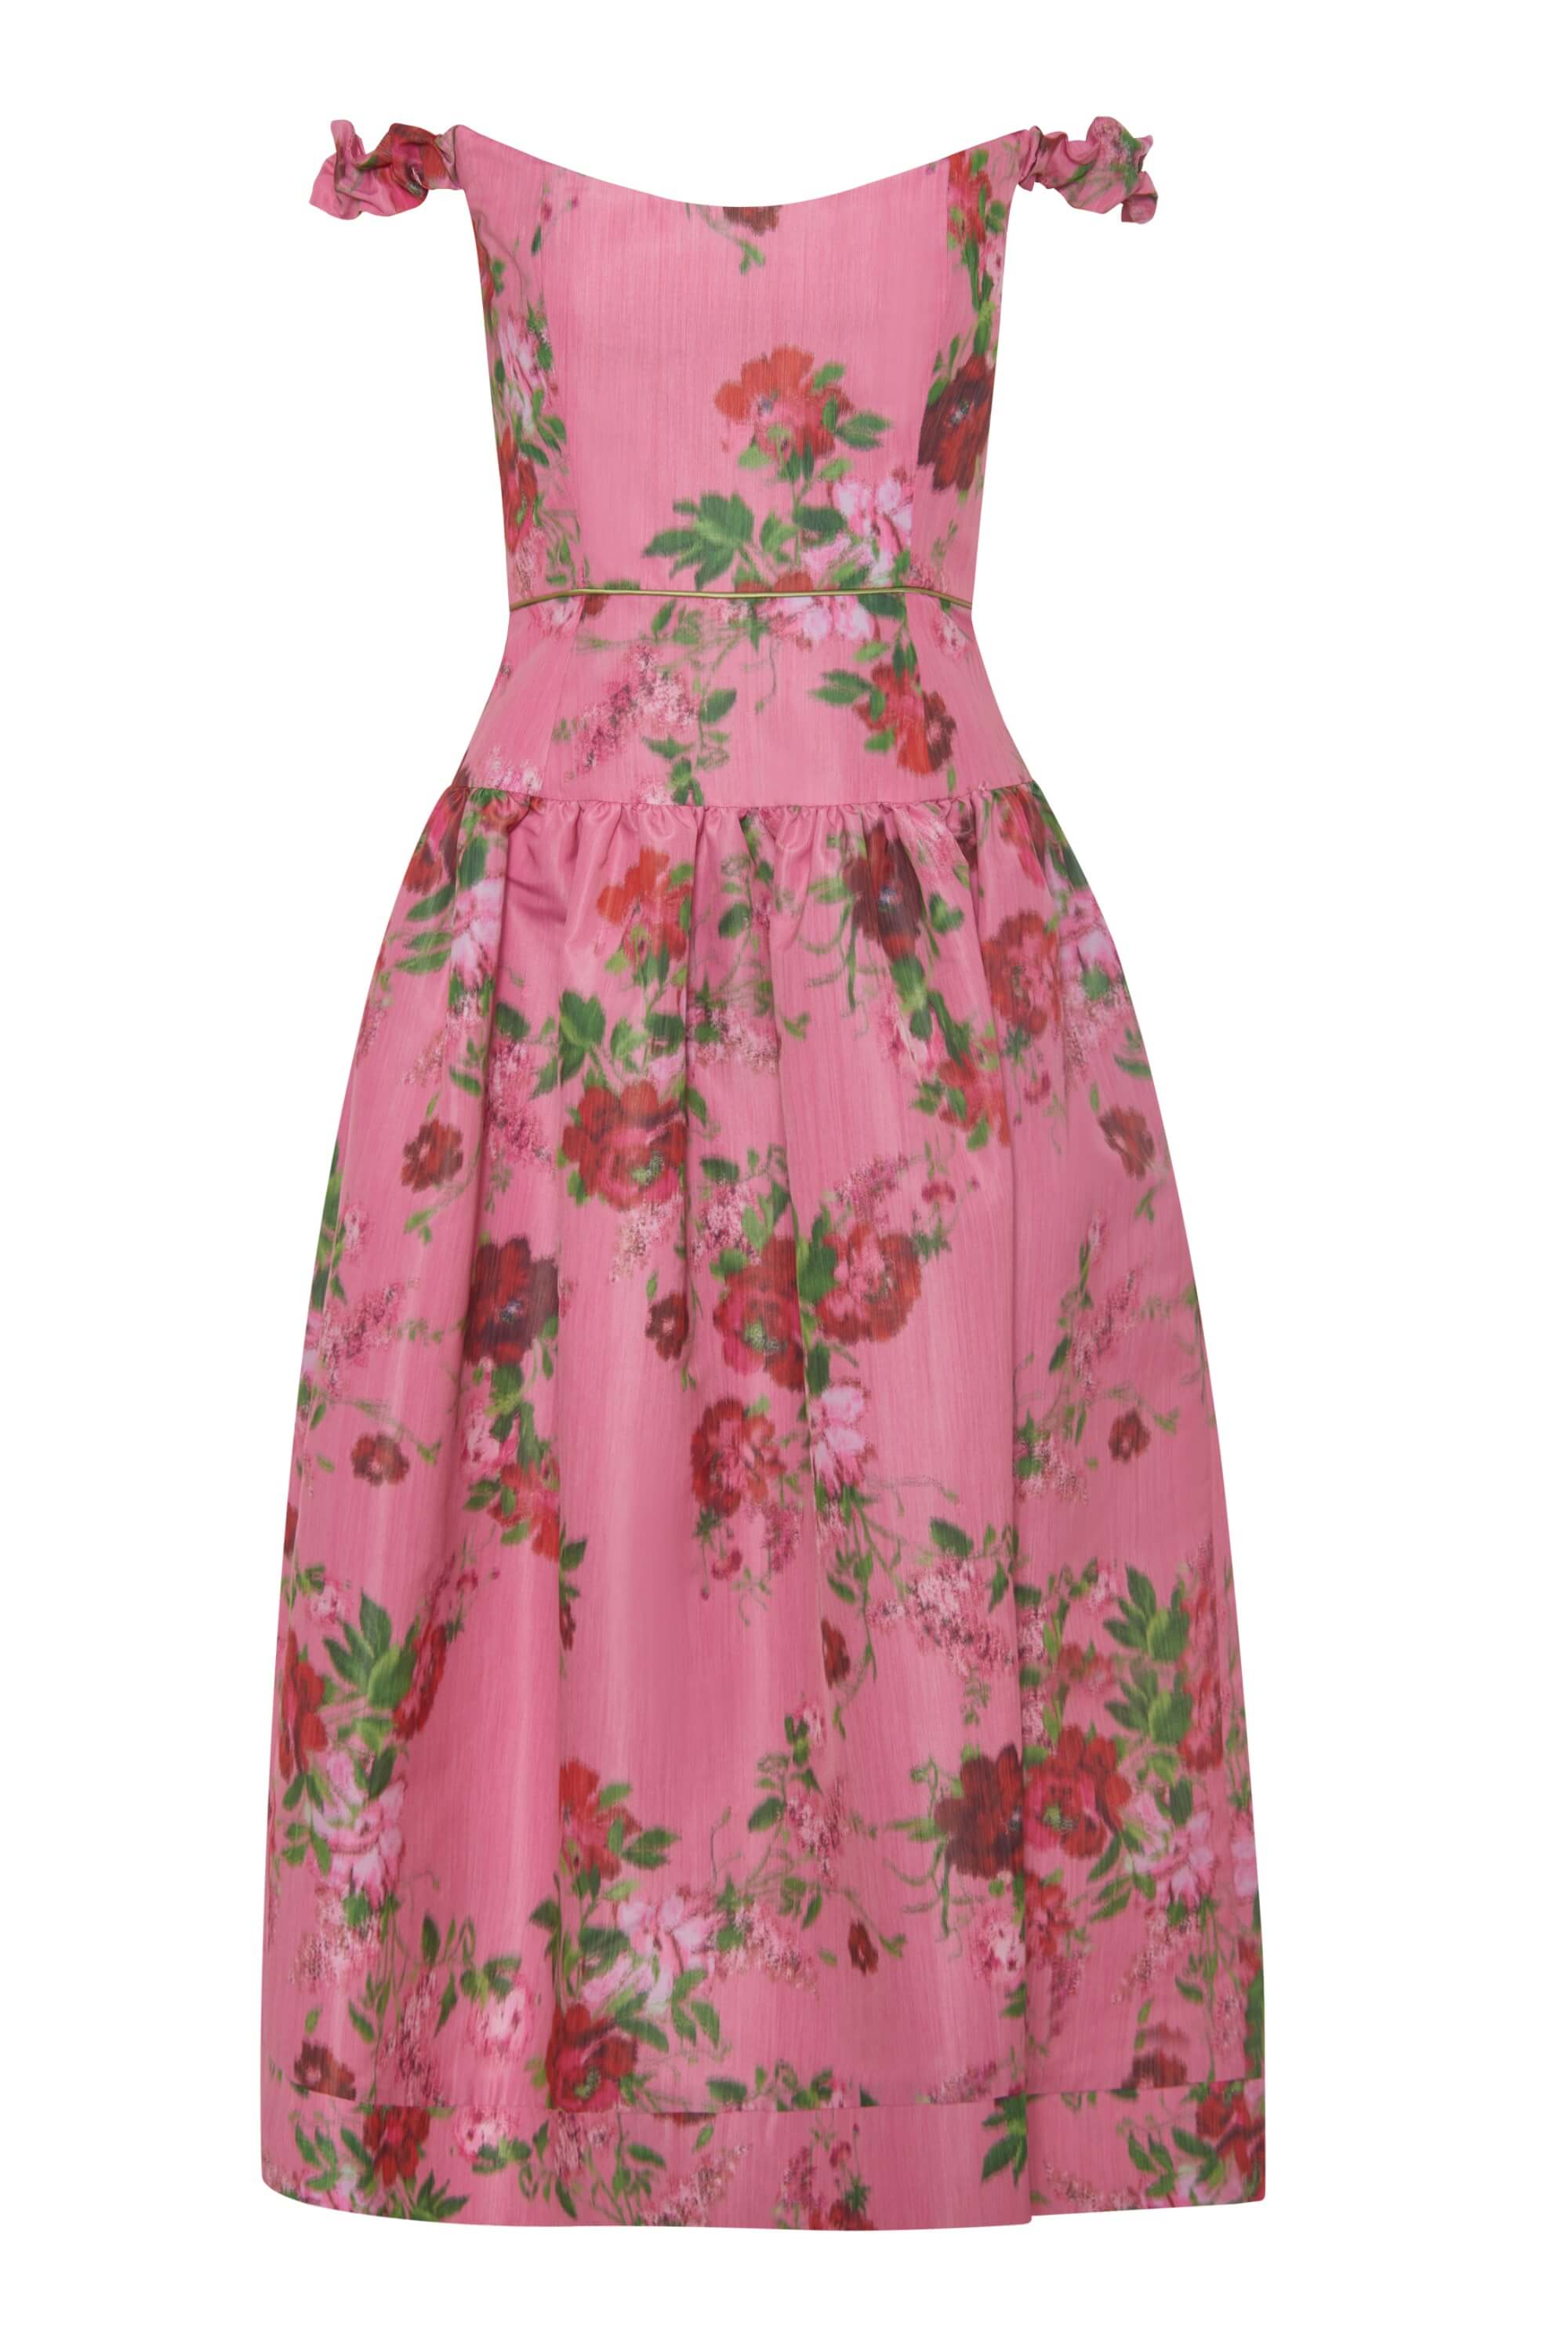 Giorgia Pink Floral Ikat Midi Dress